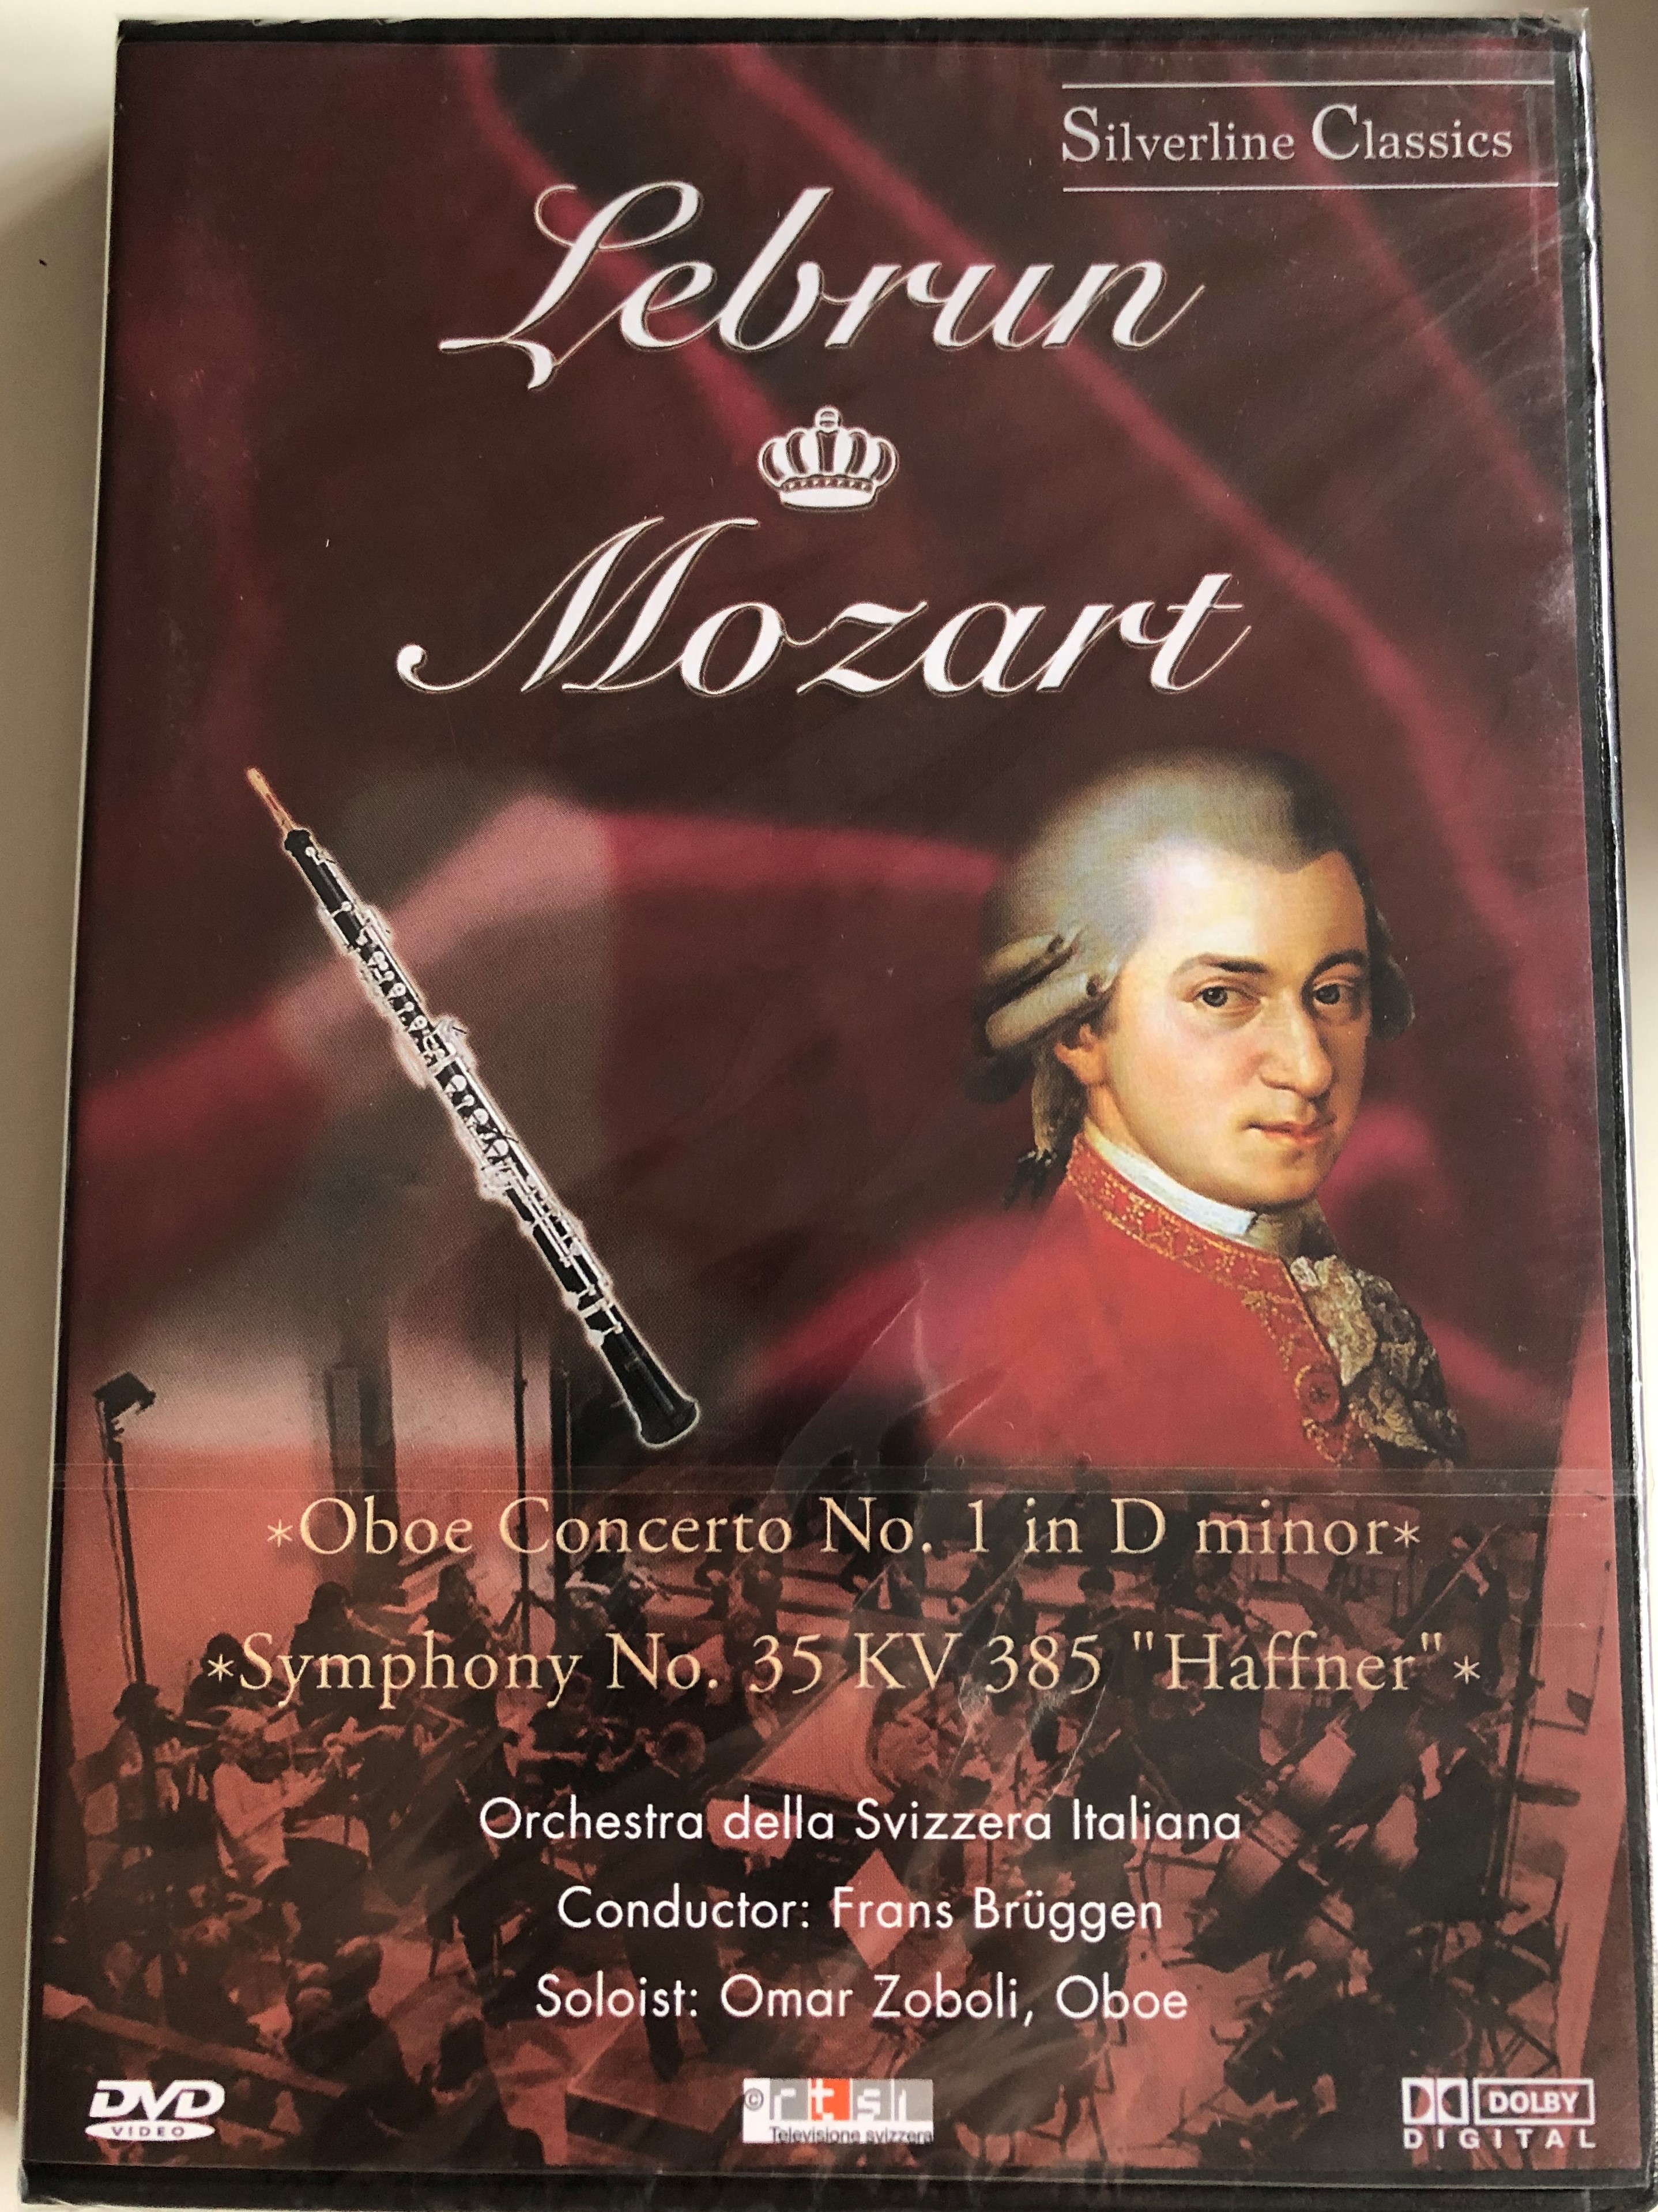 lebrun-mozart-oboe-concerto-no.-1-in-d-minor-symphony-no.-35-kv-385-haffner-orchestra-della-svizzera-italiana-frans-br-ggen-omar-zoboli-silverline-classics-cascade-medien-dvd-2003-80009-1-.jpg